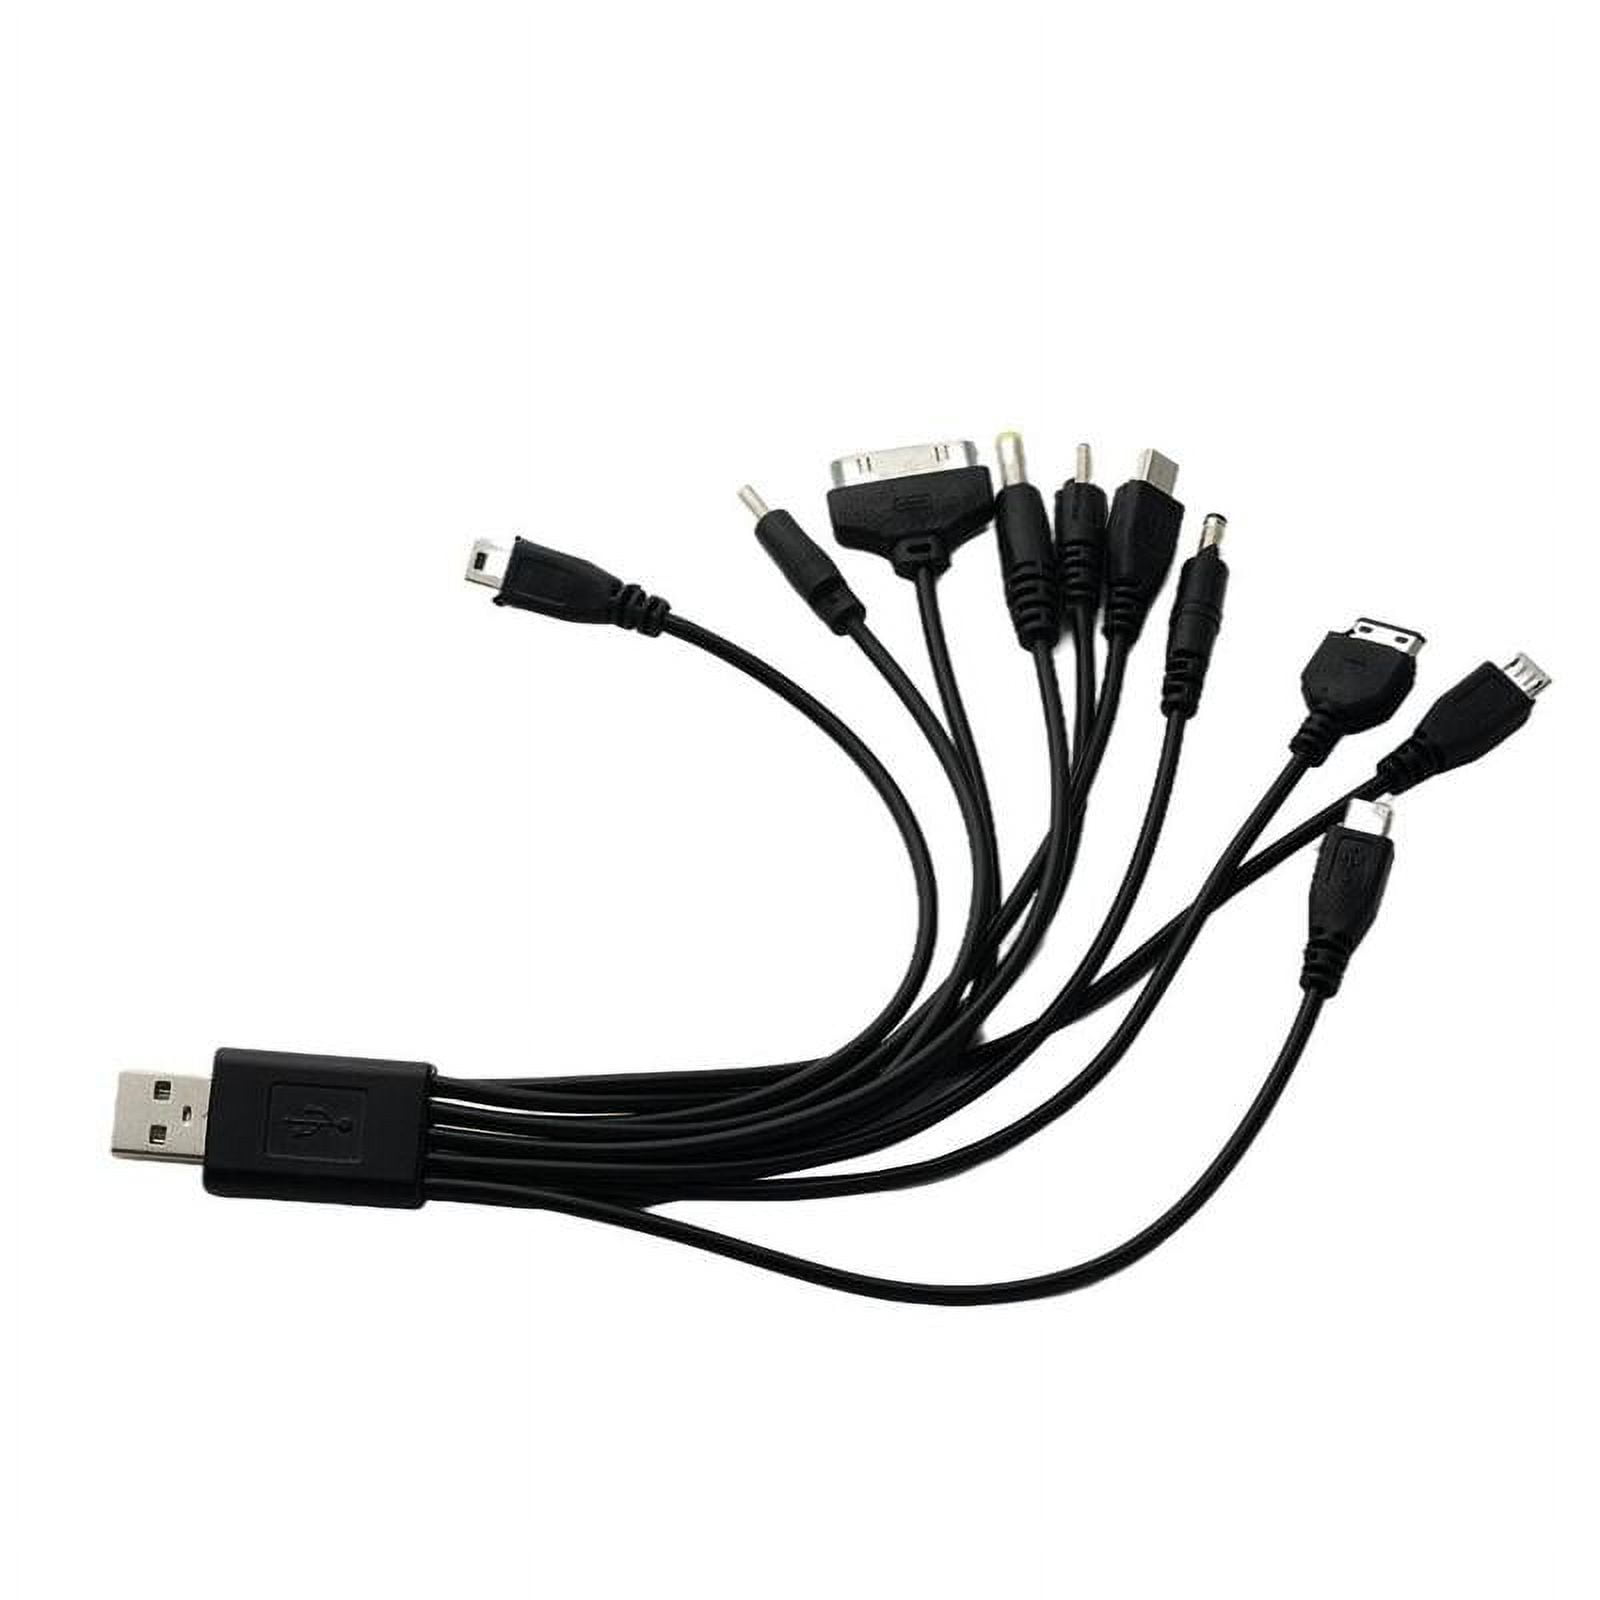 10 en 1 Universal Multifunción Cable Fit USB Cargador Celular Teléfono  Móvil MP4 Zaf Blanco